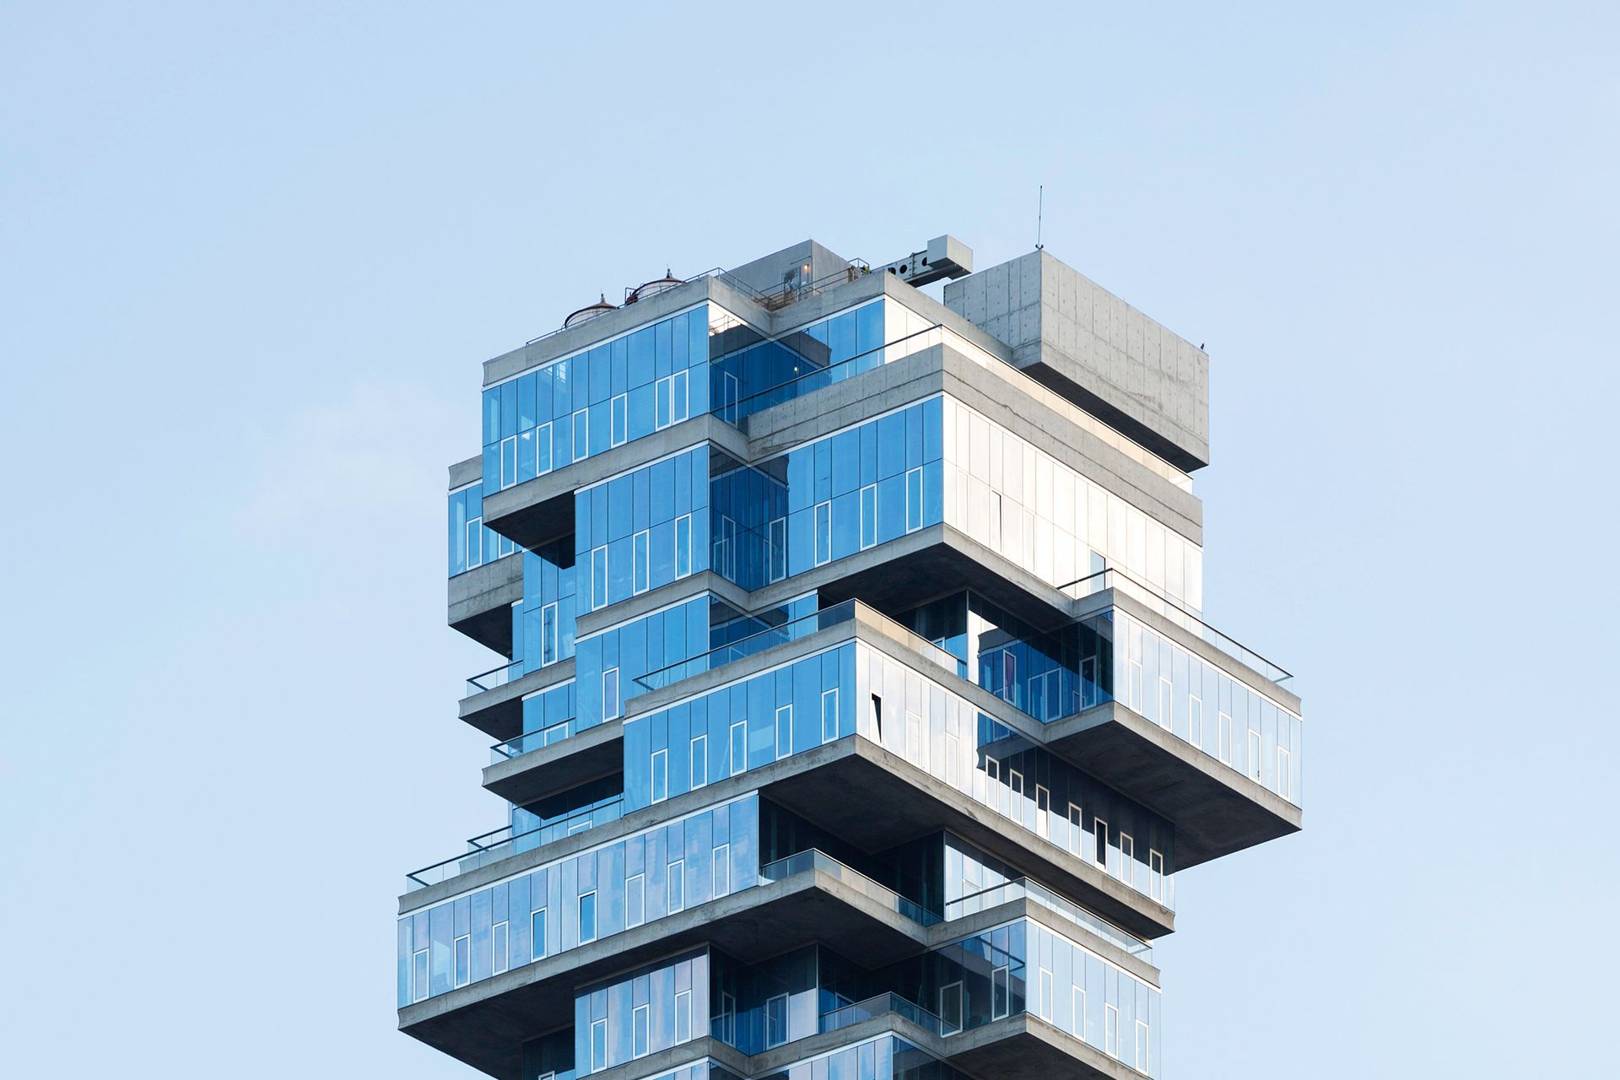 The architectural twist that inspired New York’s Jenga skyscraper